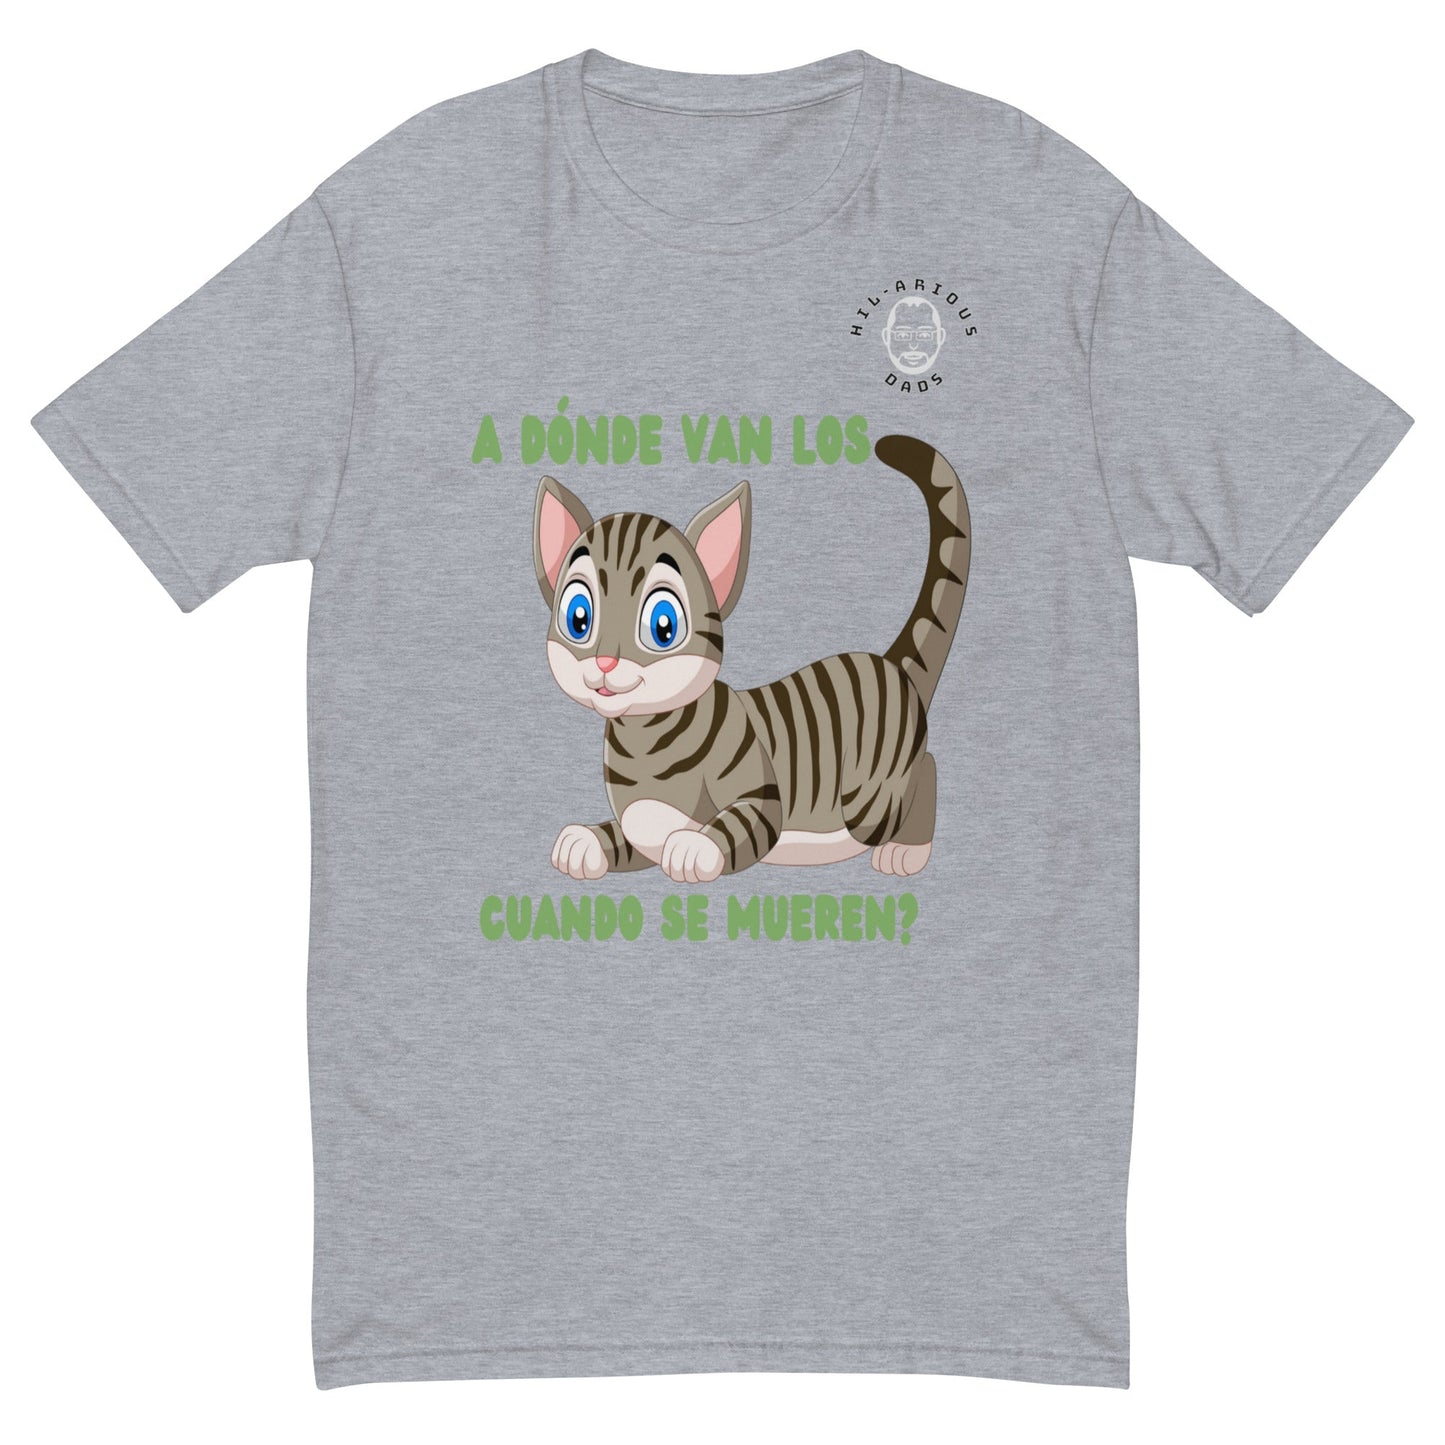 A dónde van los Gatos cuando se Mueren?-T-shirt - Hil-arious Dads